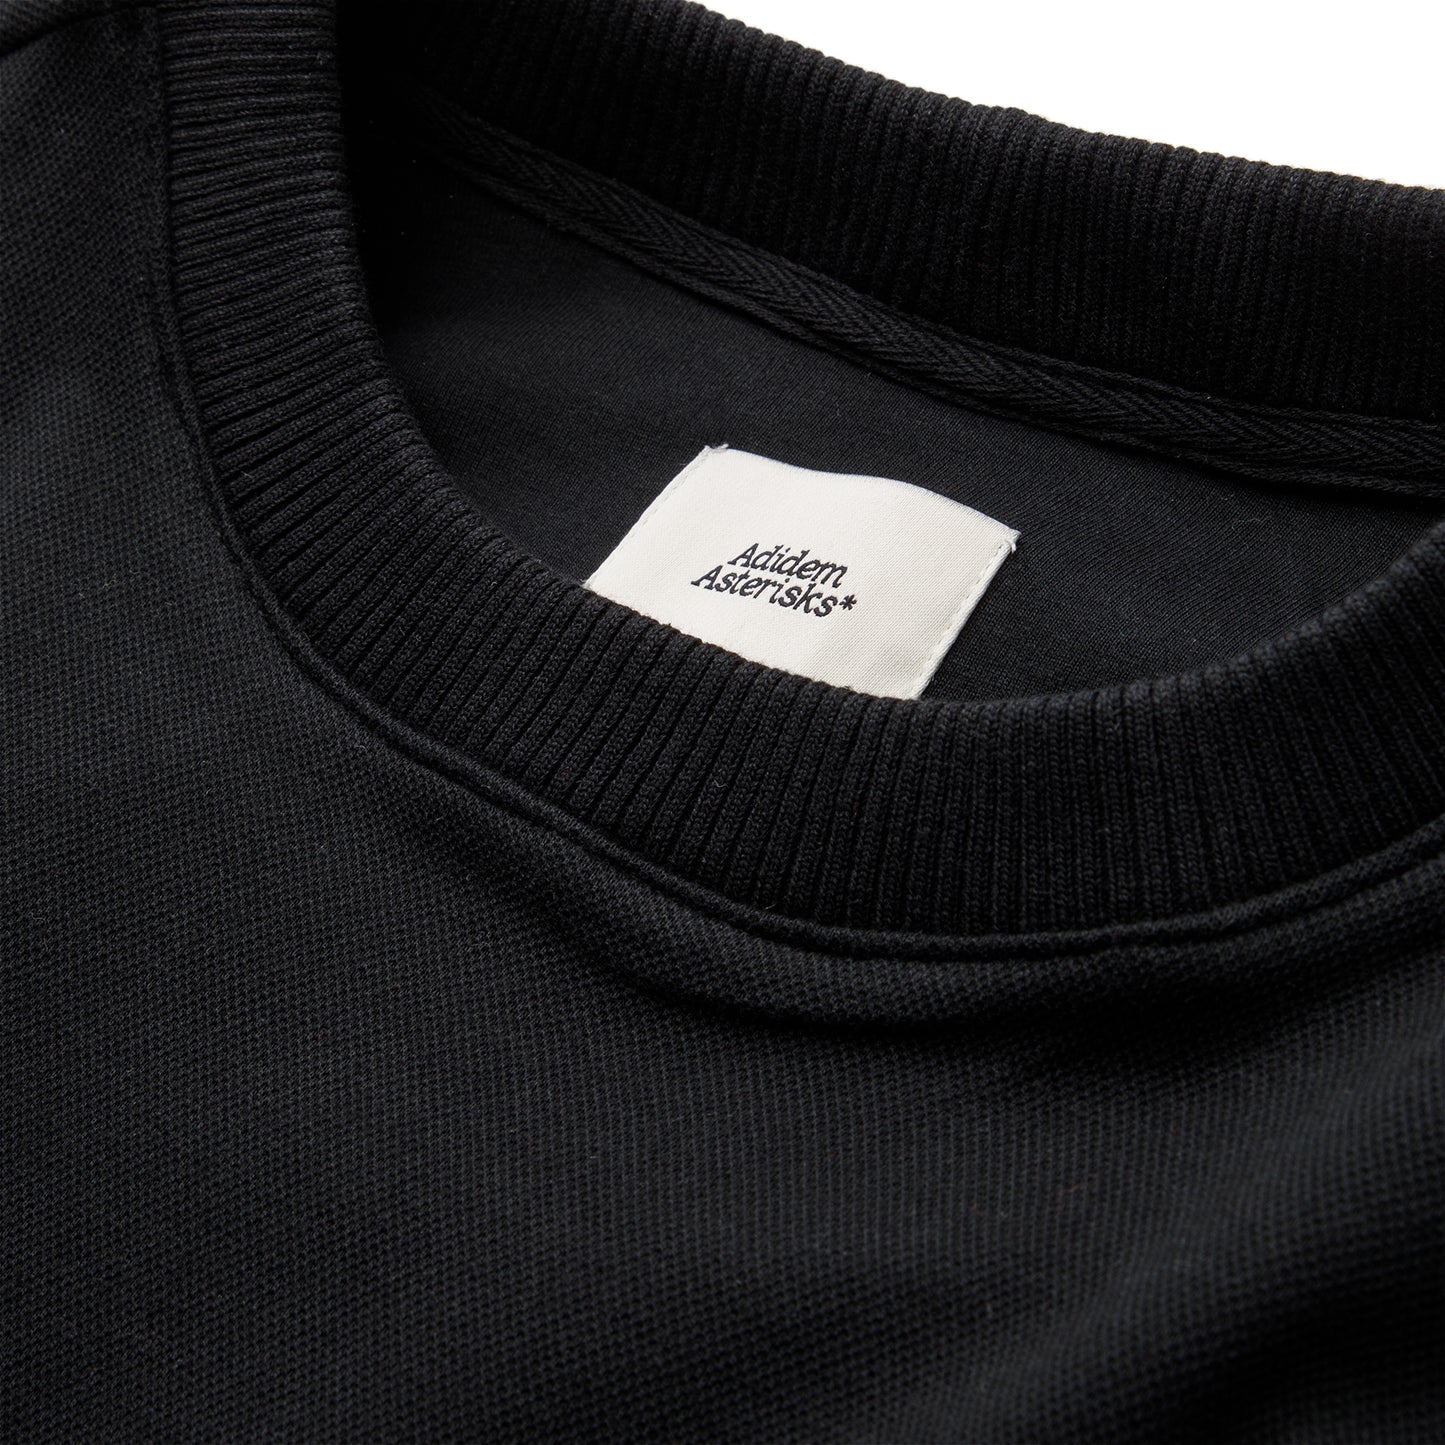 Adidem Asterisks Long Sleeve Pique Shirt (Black)